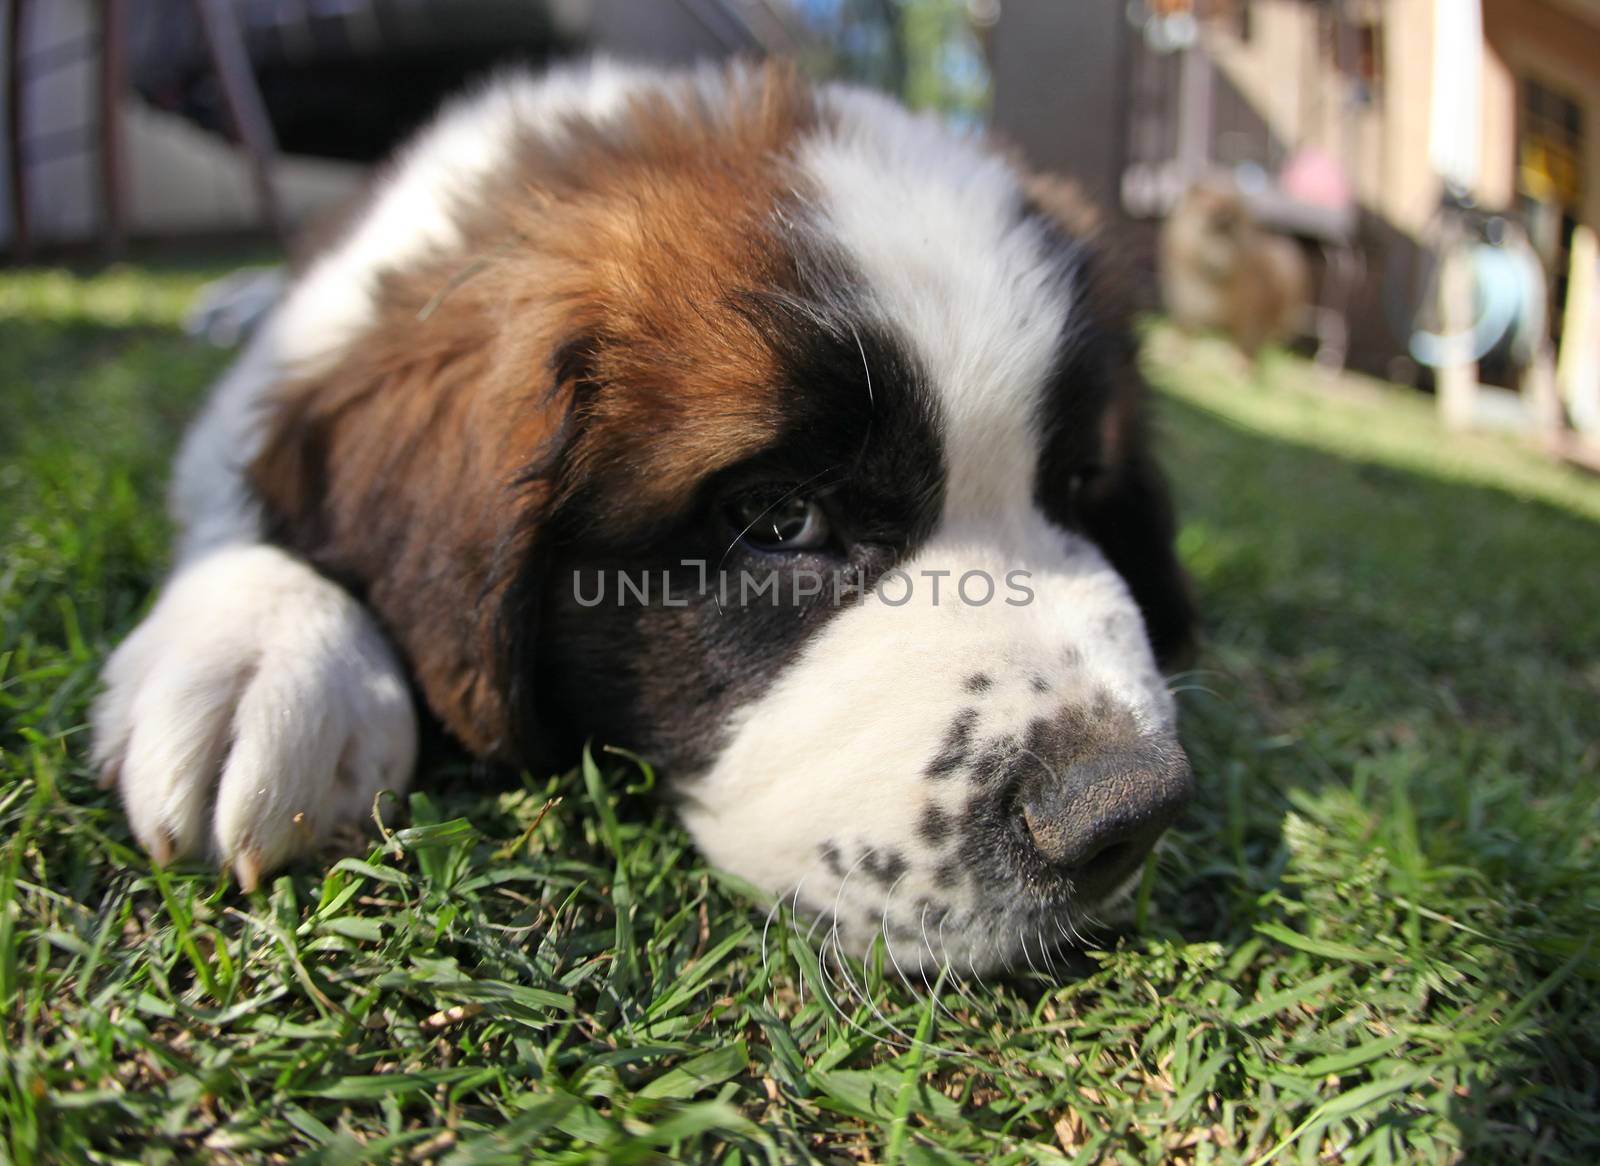 Sweet Saint Bernard Puppy Lying in the Grass Looking Sad